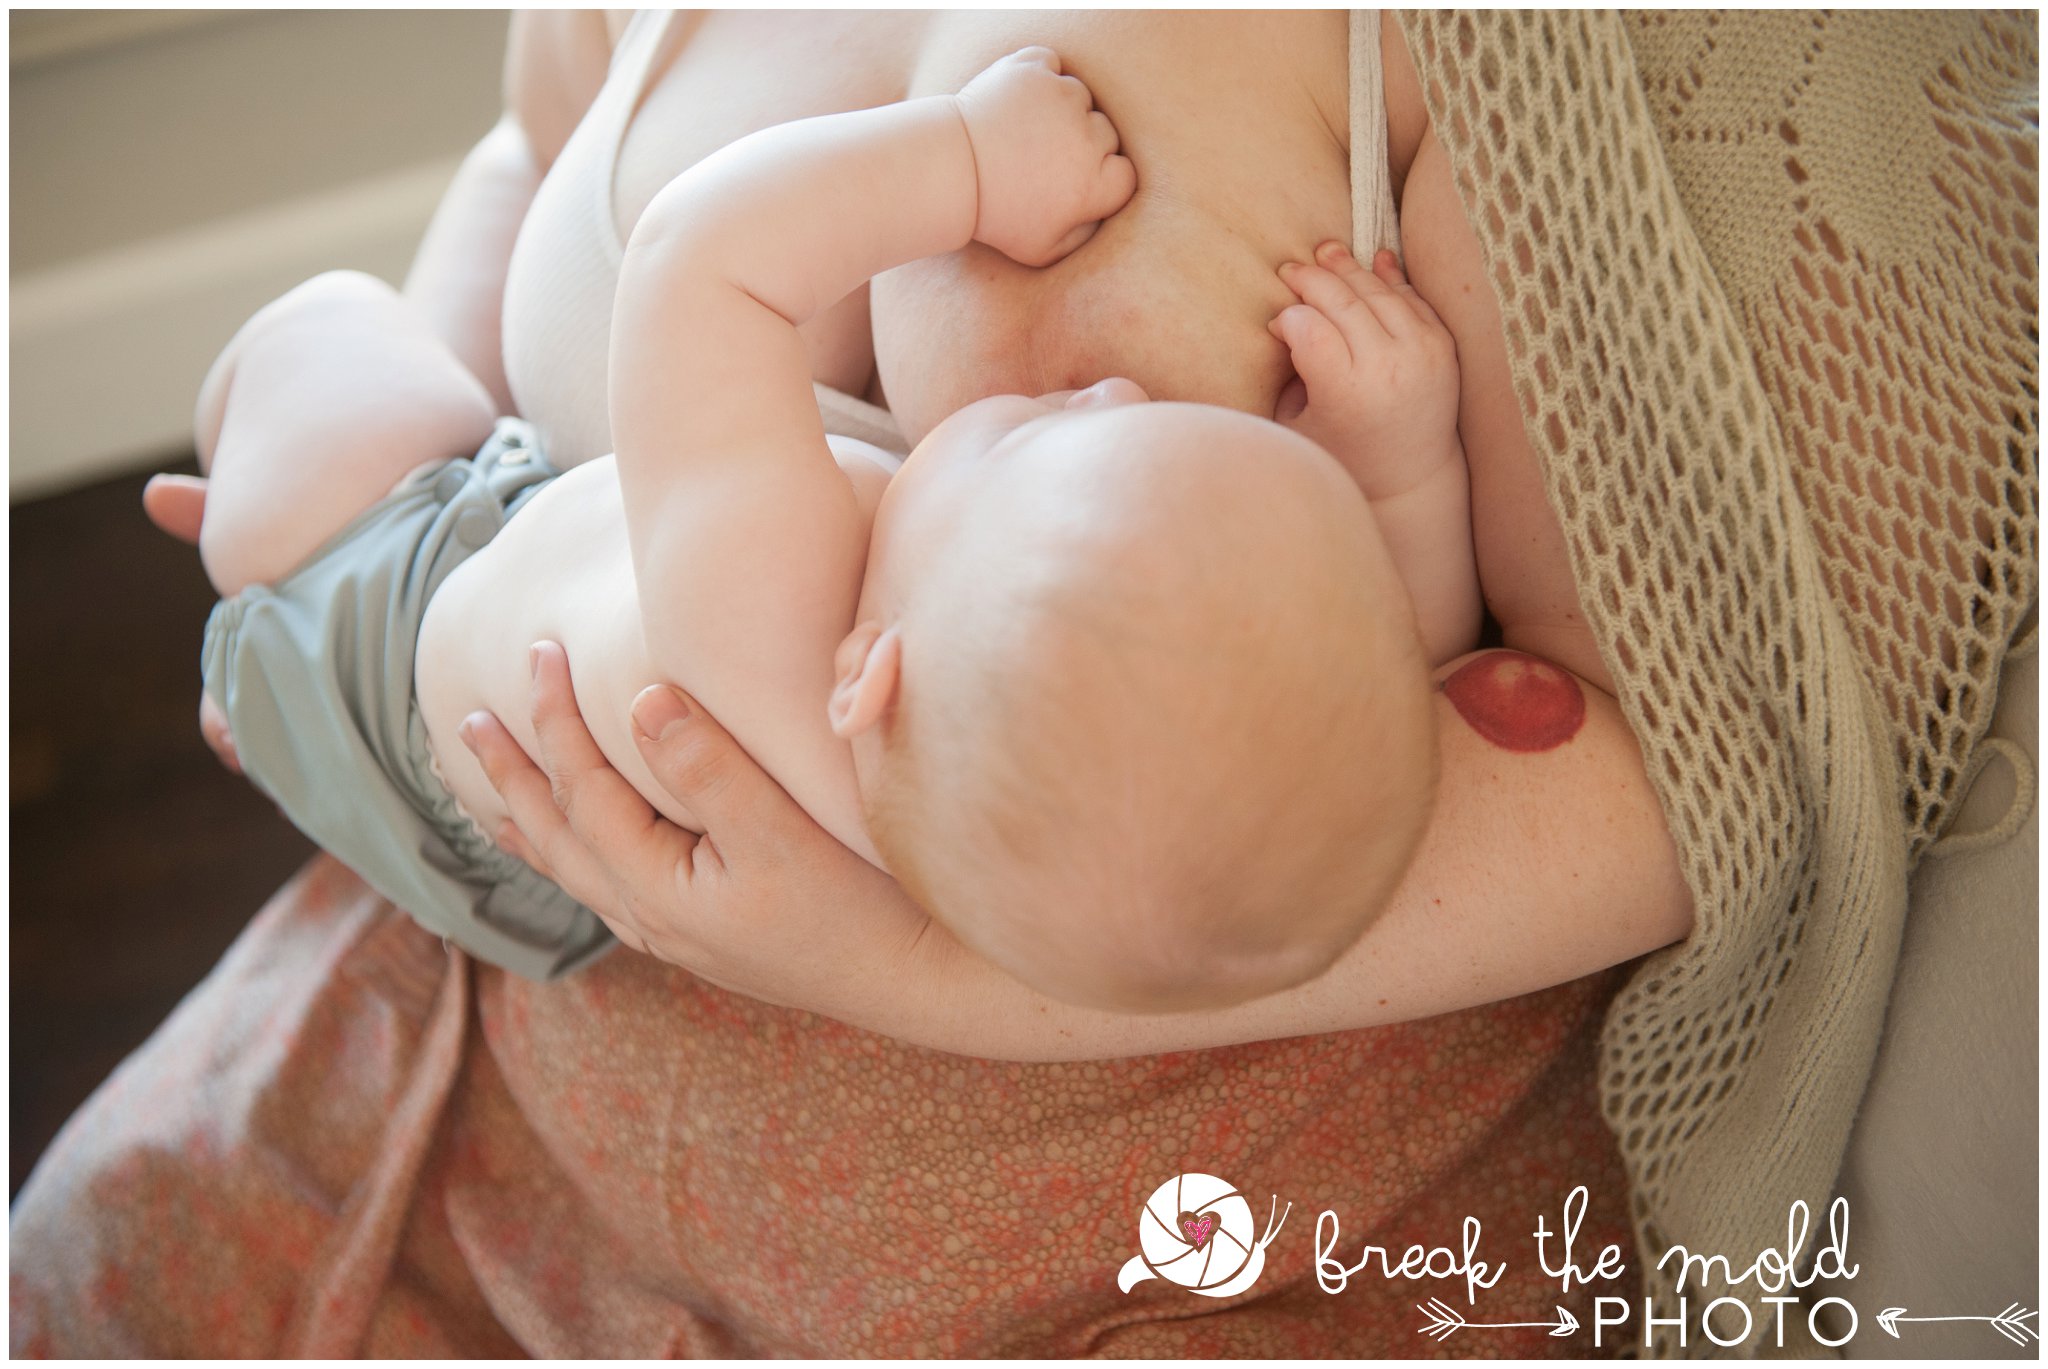 break-the-mold-photo-nursing-body-love-baby-pregnant-women-powerful-breastfeeding-sessions_7203.jpg